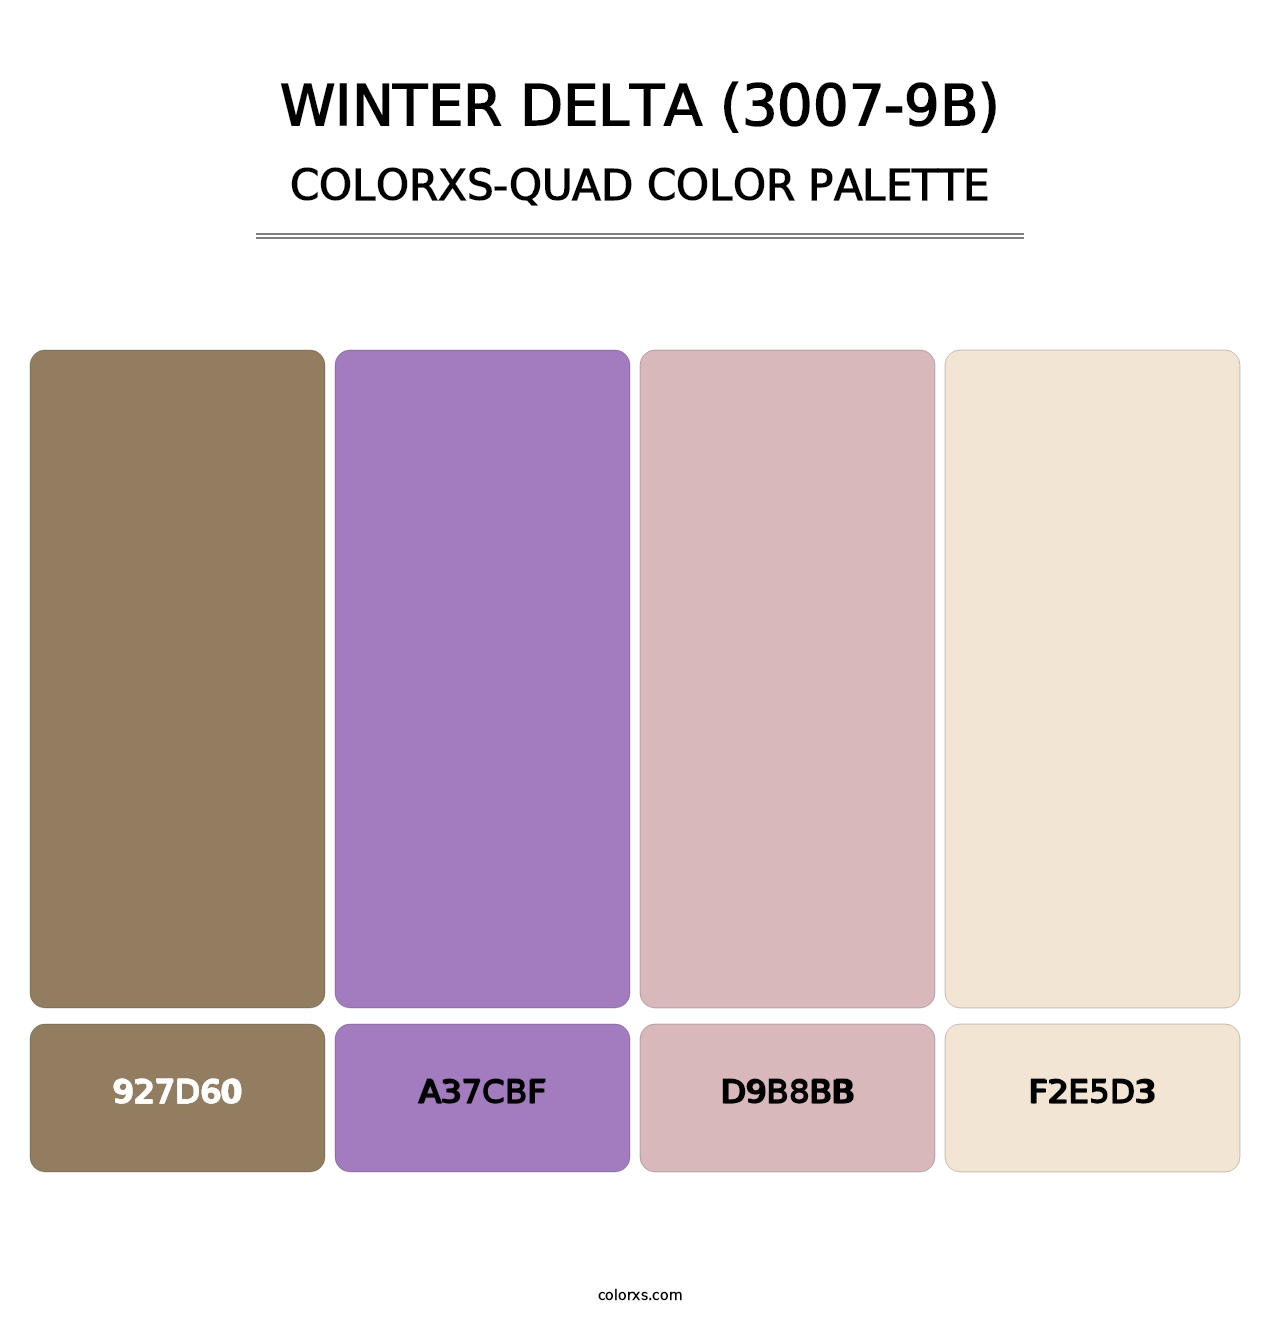 Winter Delta (3007-9B) - Colorxs Quad Palette